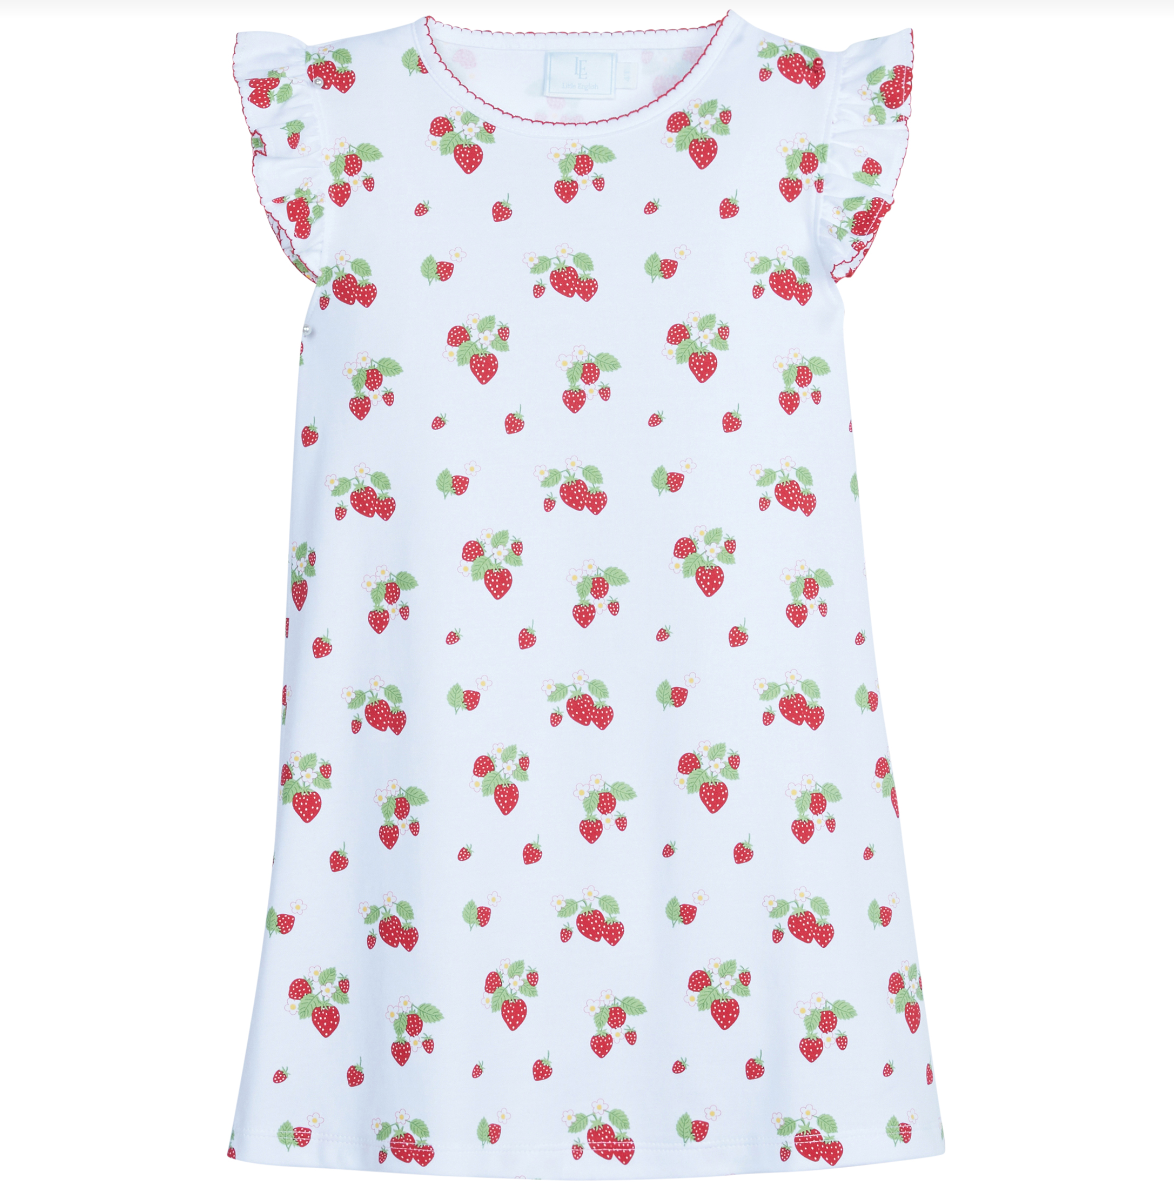 Strawberries Angel Sleeve Dress, Sizw: 2T